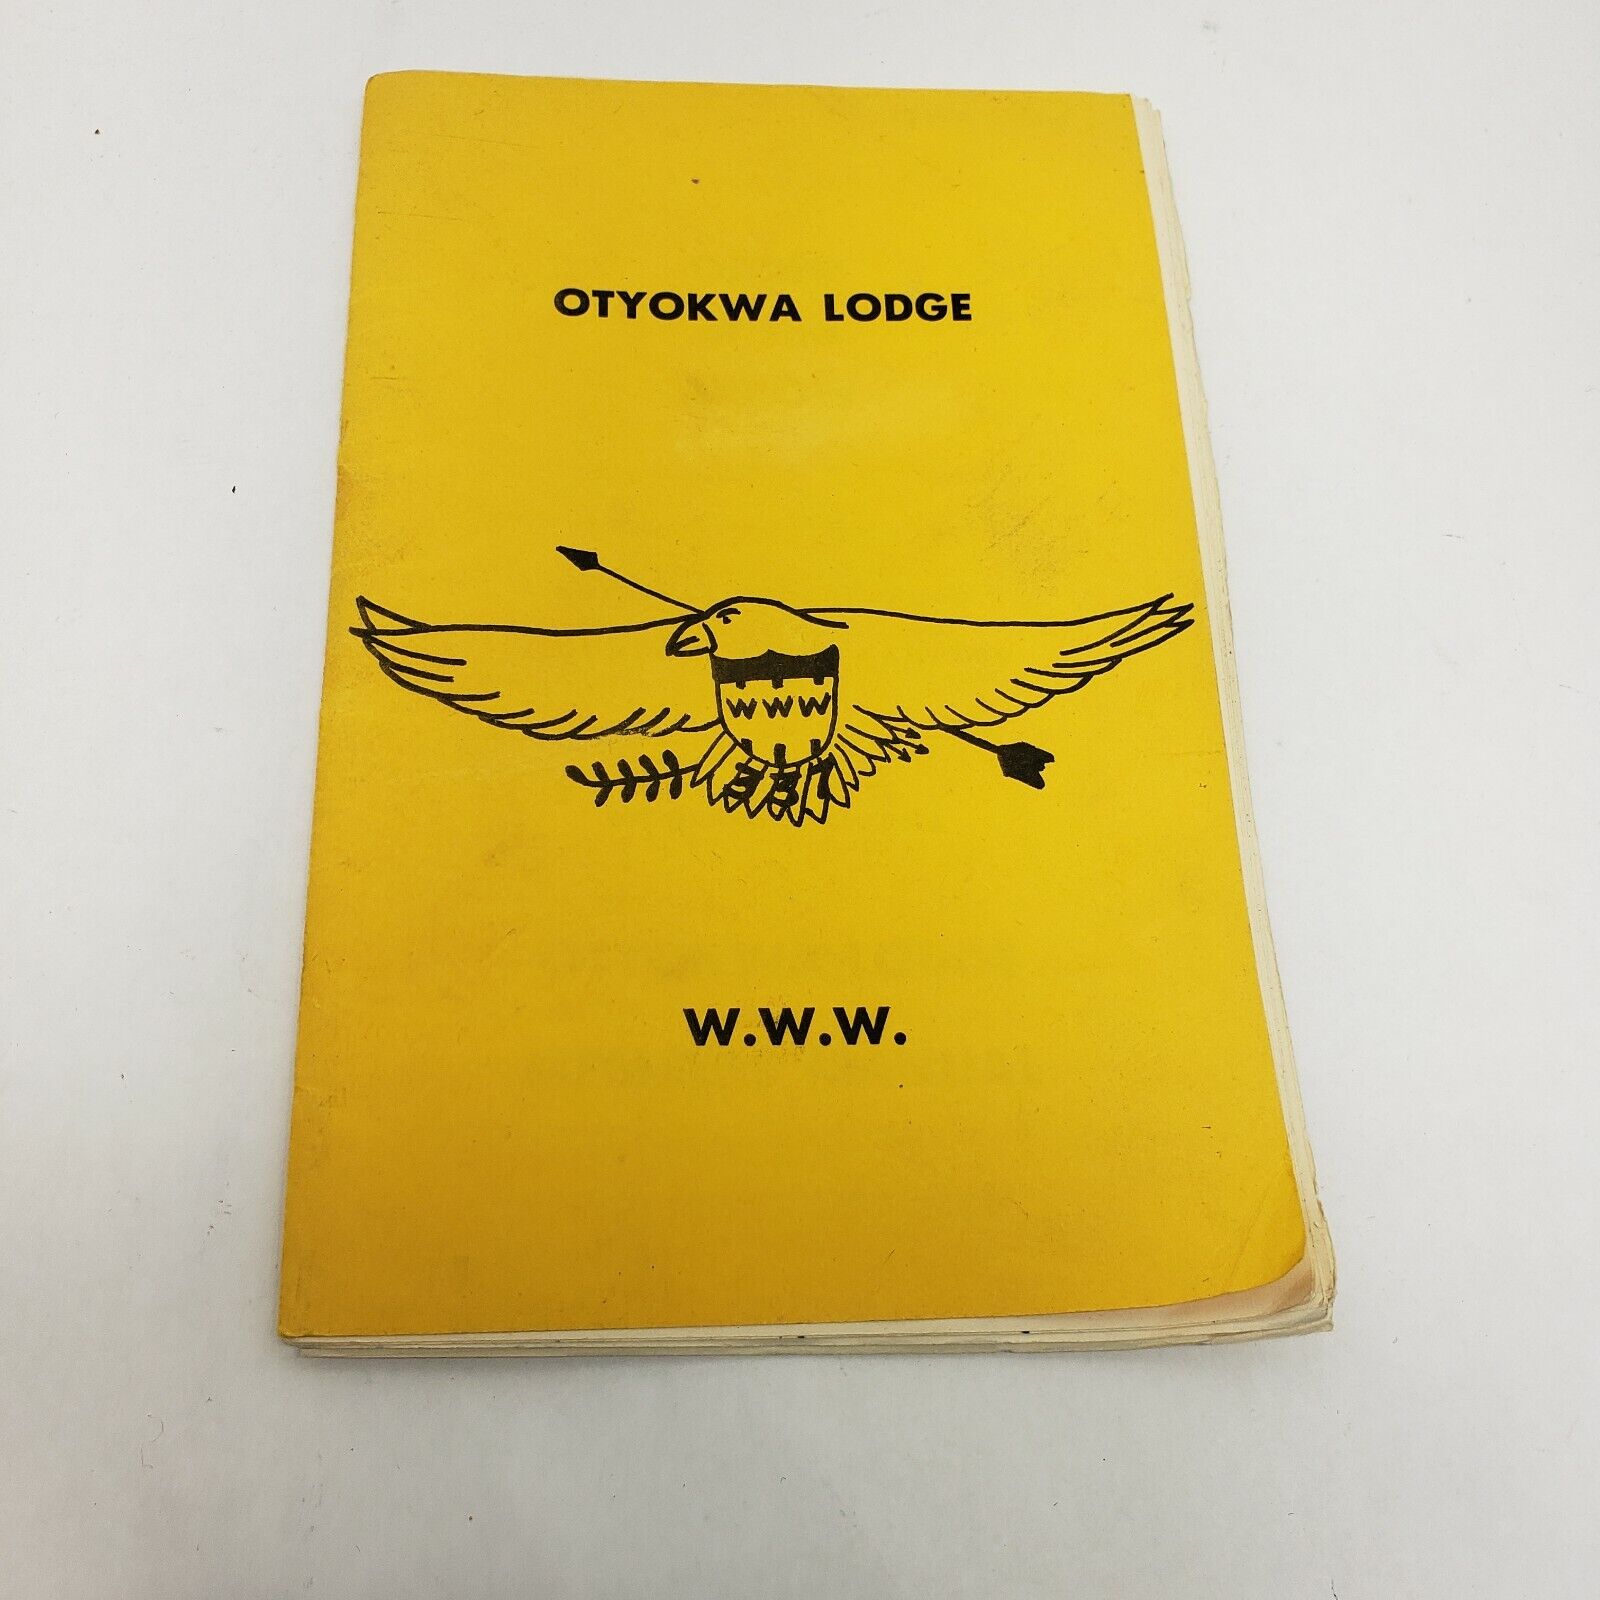 Otyokwa Lodge BSA HANDBOOK WWW Members Manual 1969 Boy Scouts Order of The Arrow